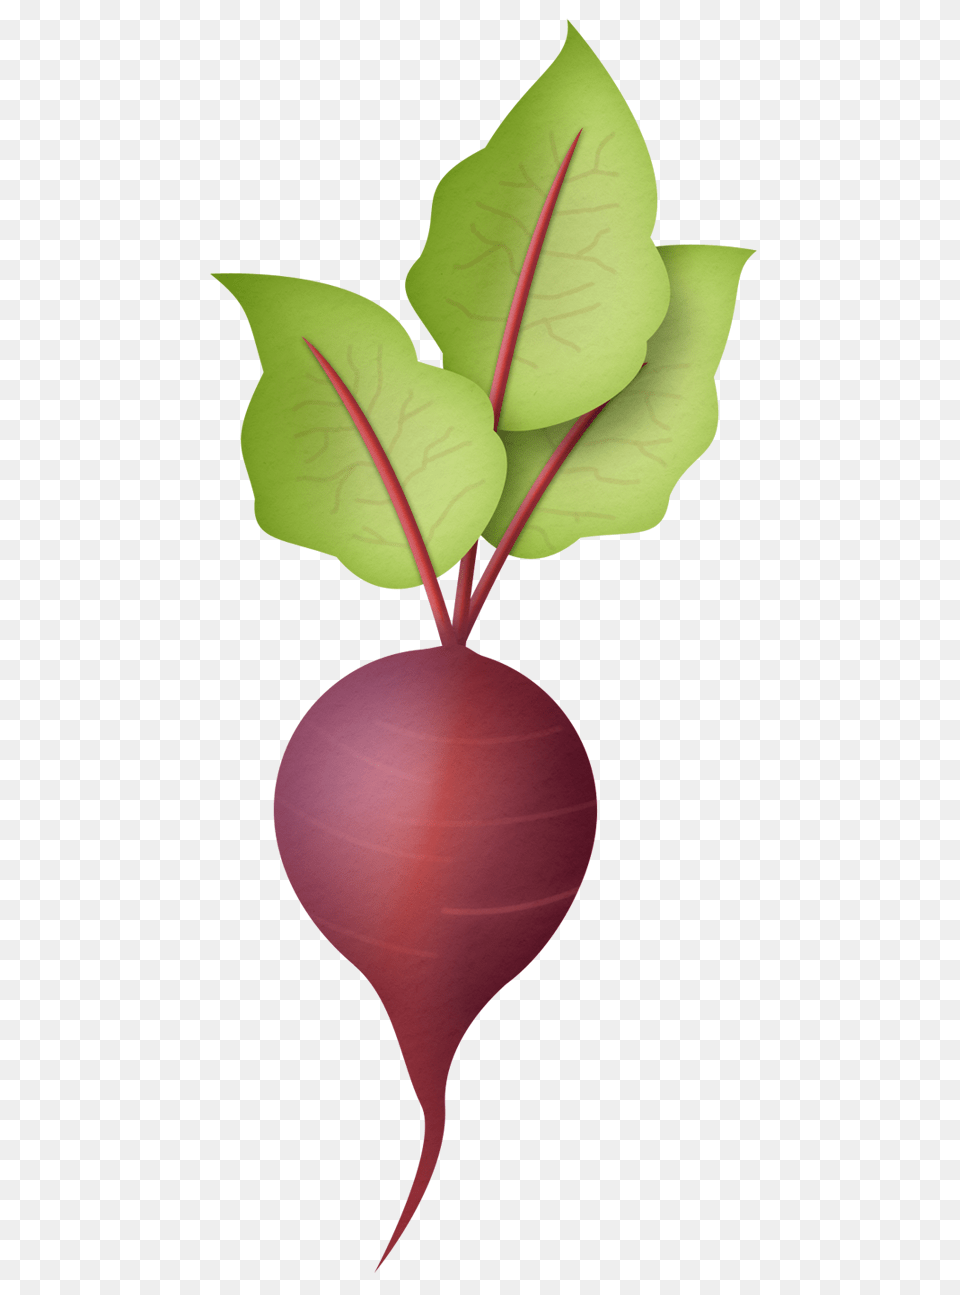 Radish, Leaf, Plant, Food, Produce Png Image